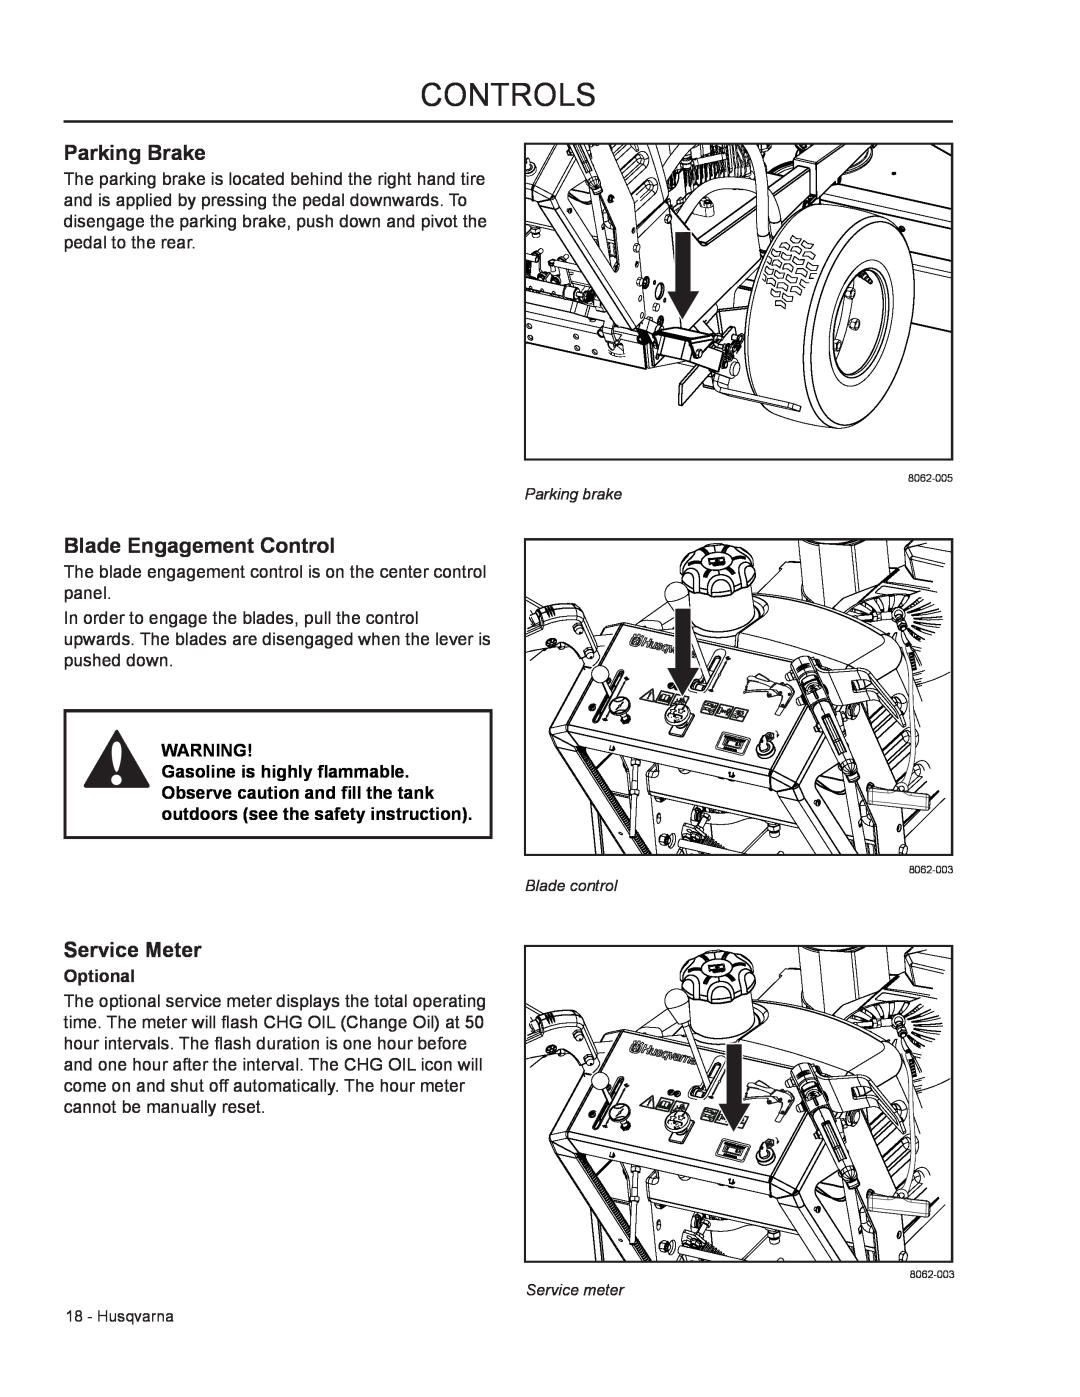 Husqvarna WHF6123 / 966947007 manual Parking Brake, Blade Engagement Control, Service Meter, Controls, Optional 